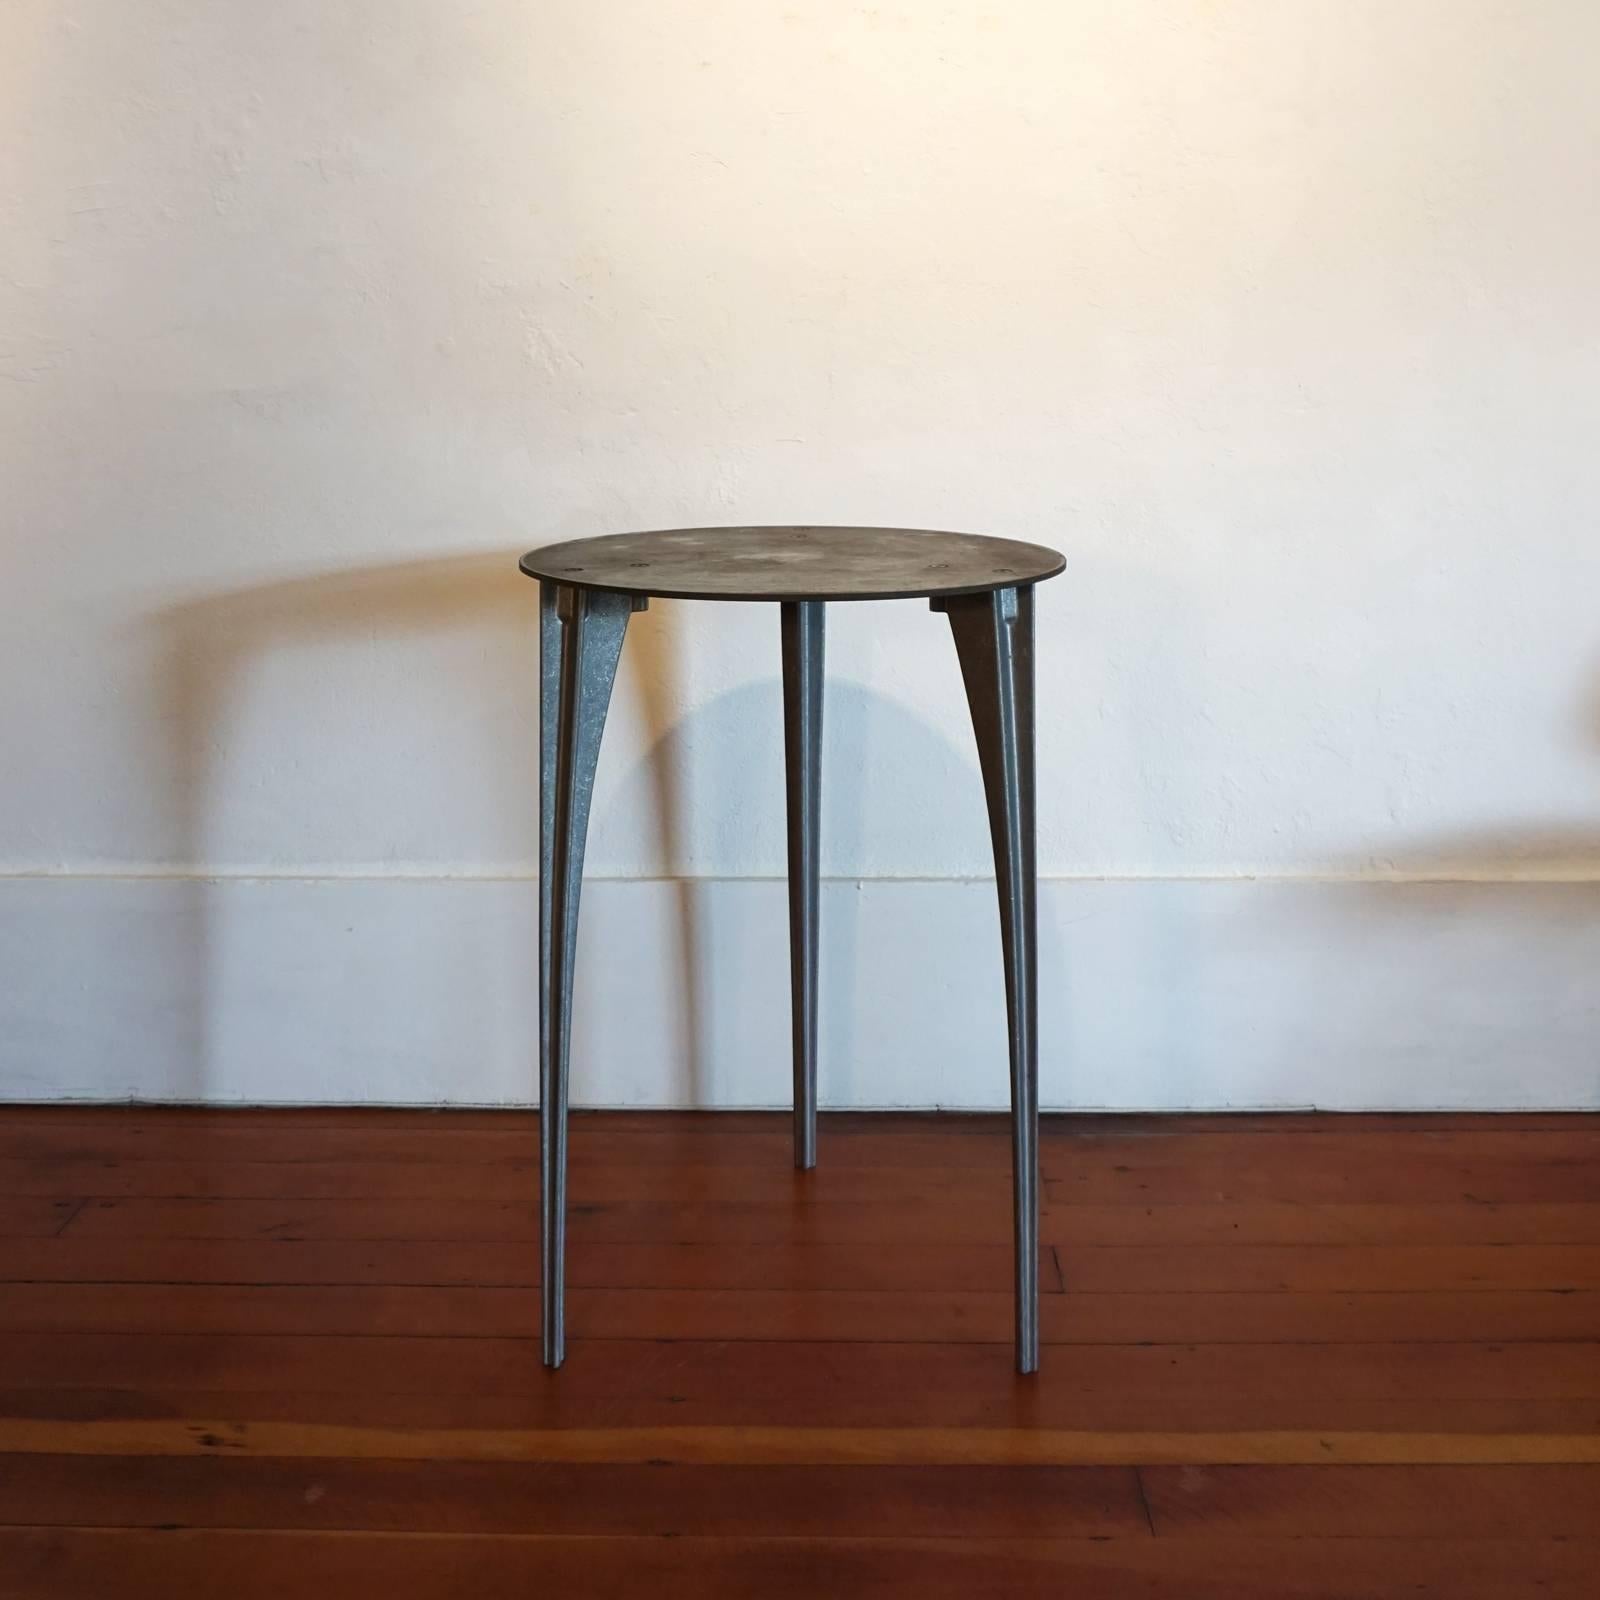 Aluminum legs with steel top pedestal or cocktail table by California designer, Robert Josten.